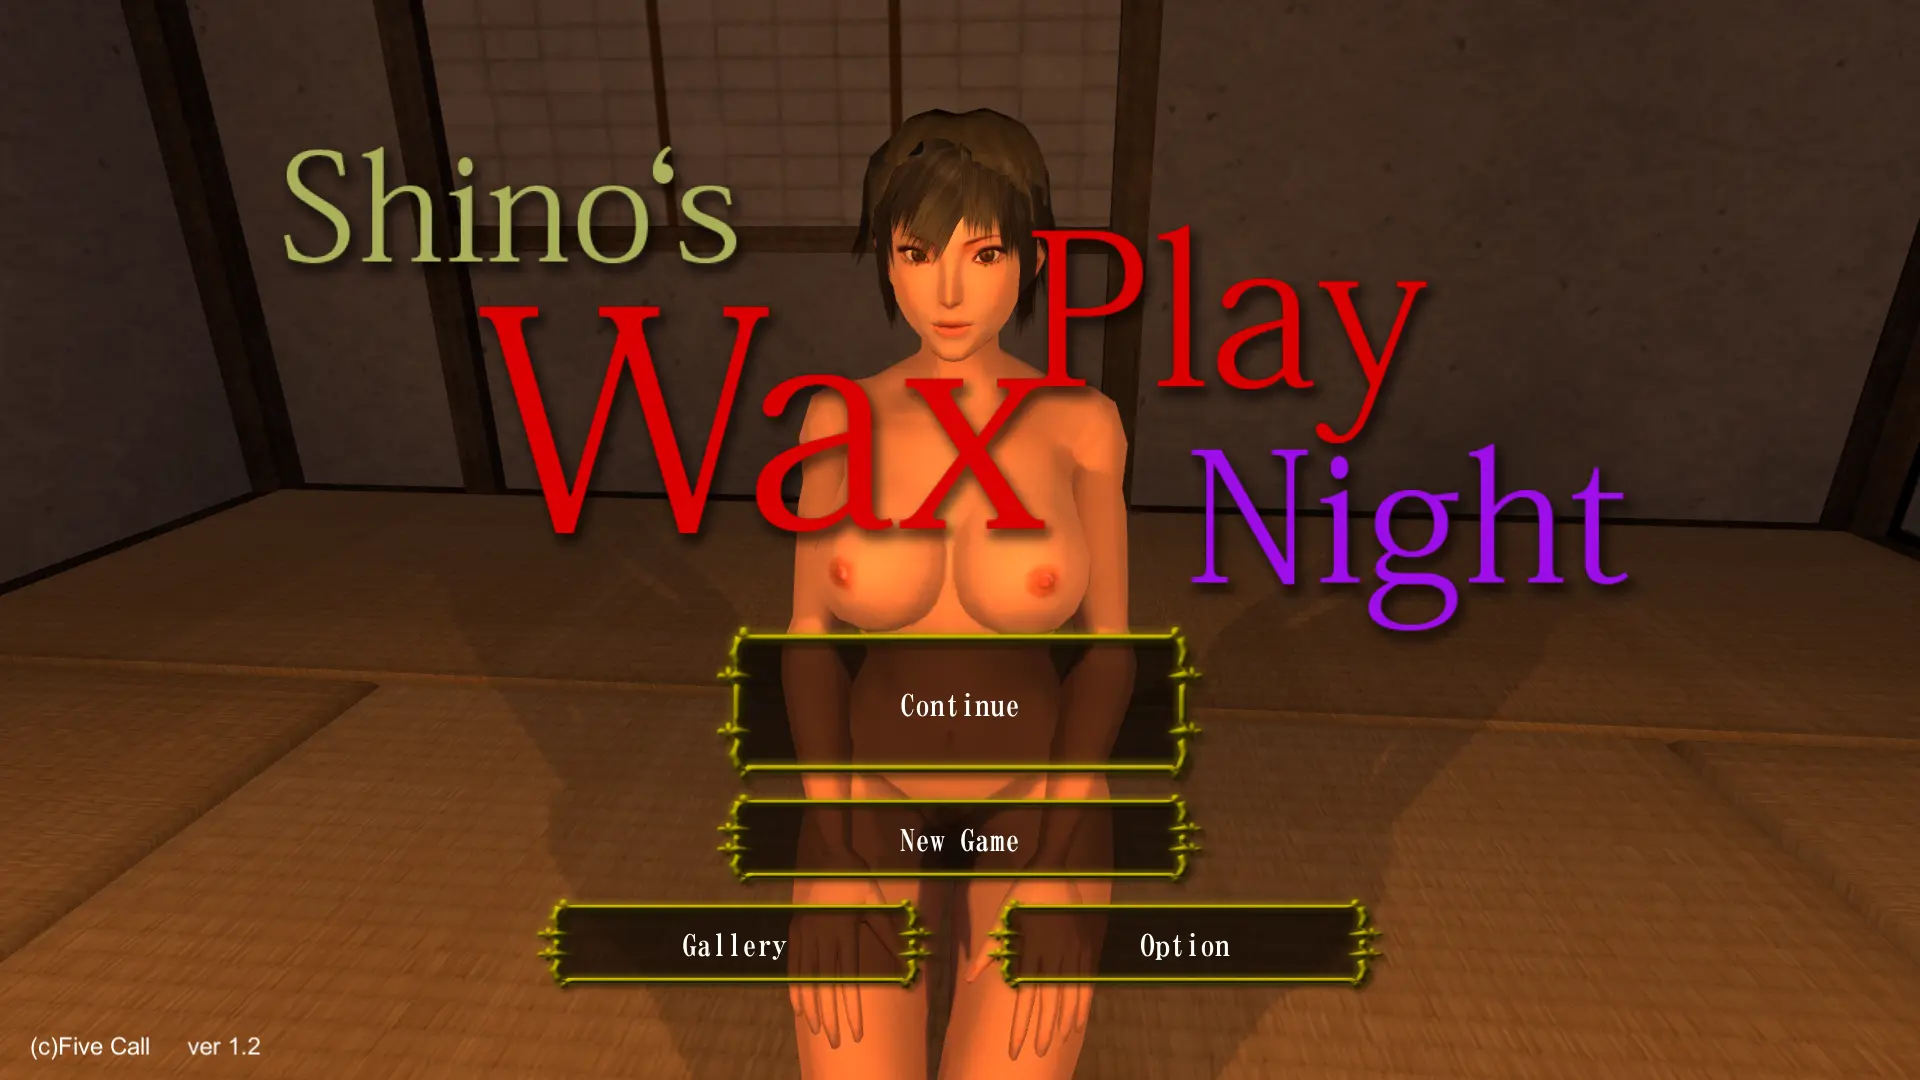 Shino's Wax Play Night main image